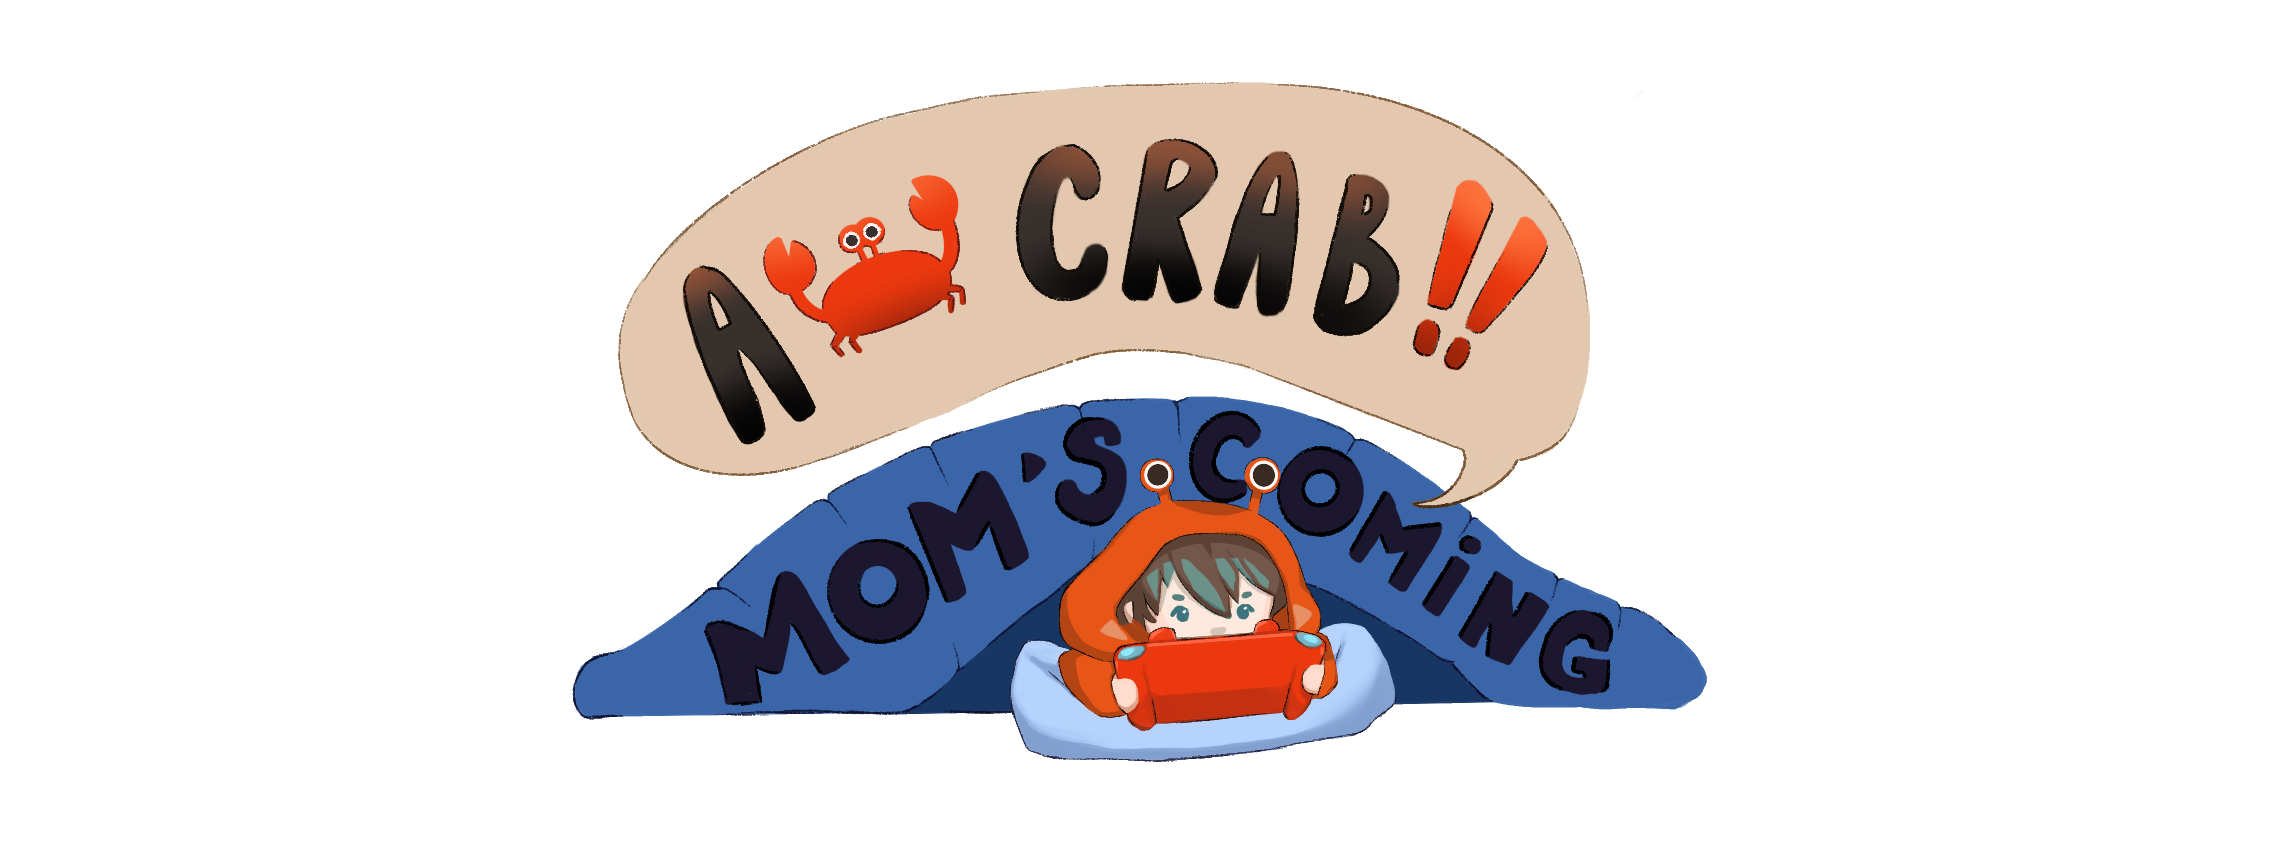 Ah Crab! Mom's Coming!